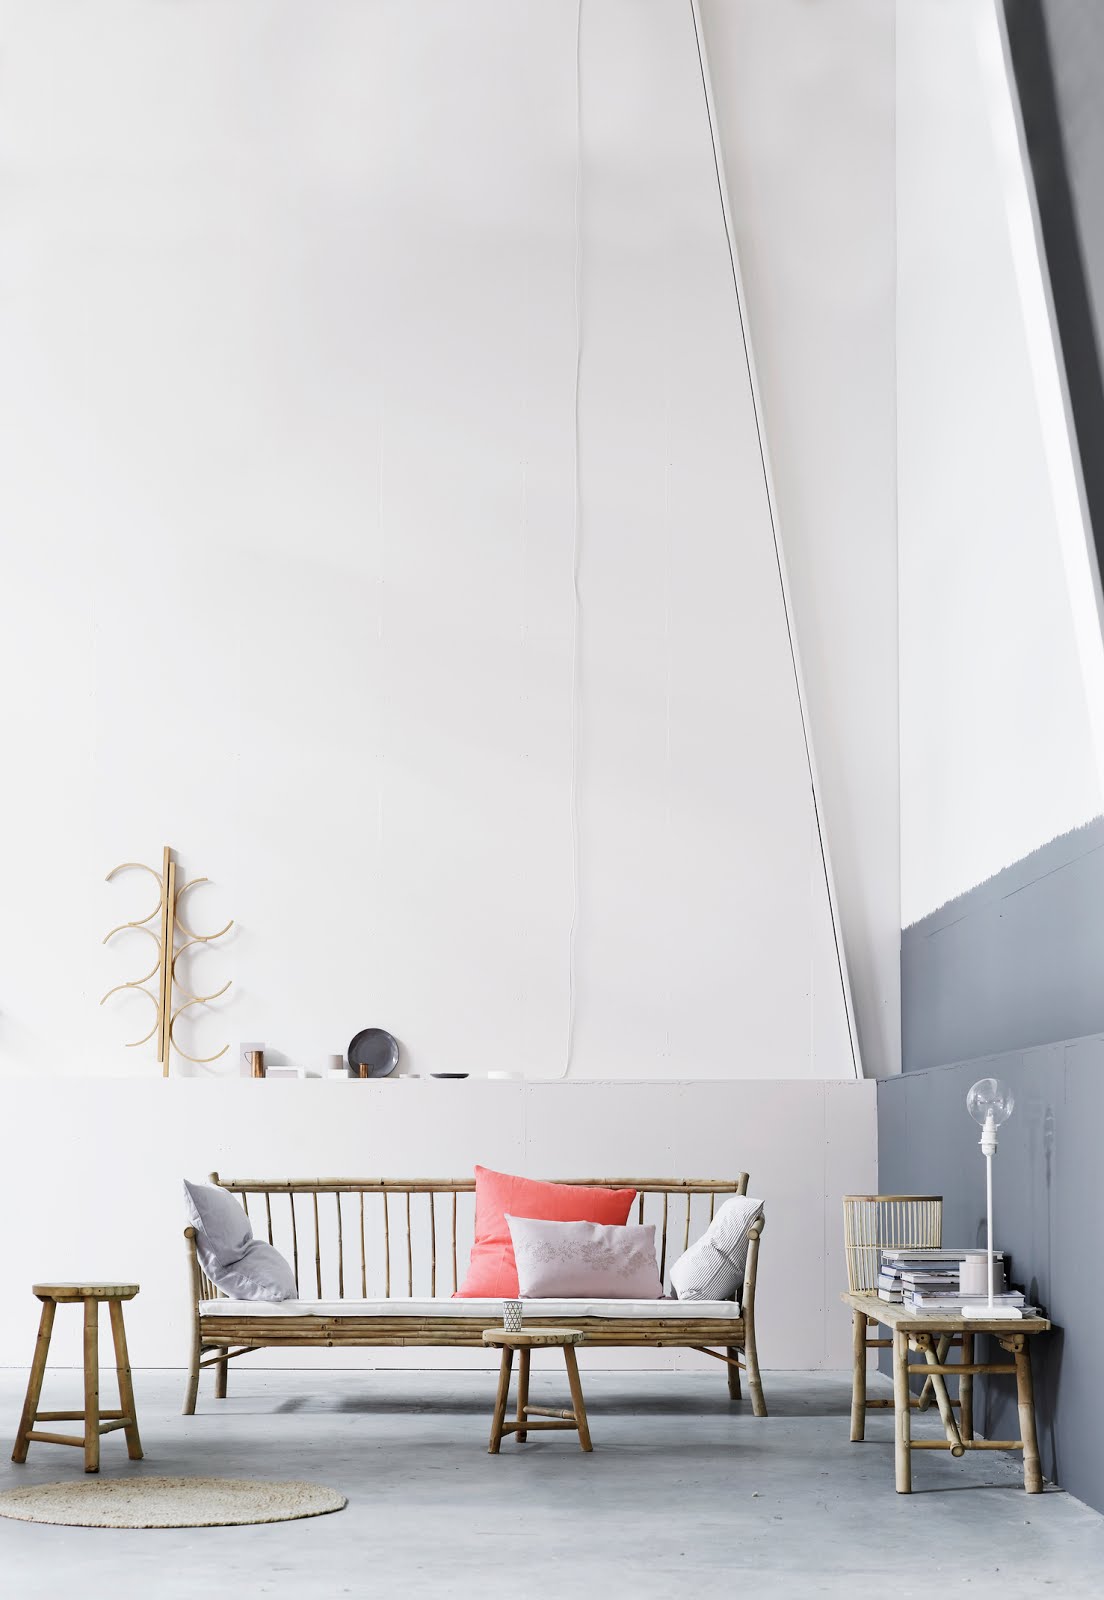 Modern interiors focus on simplicity and light